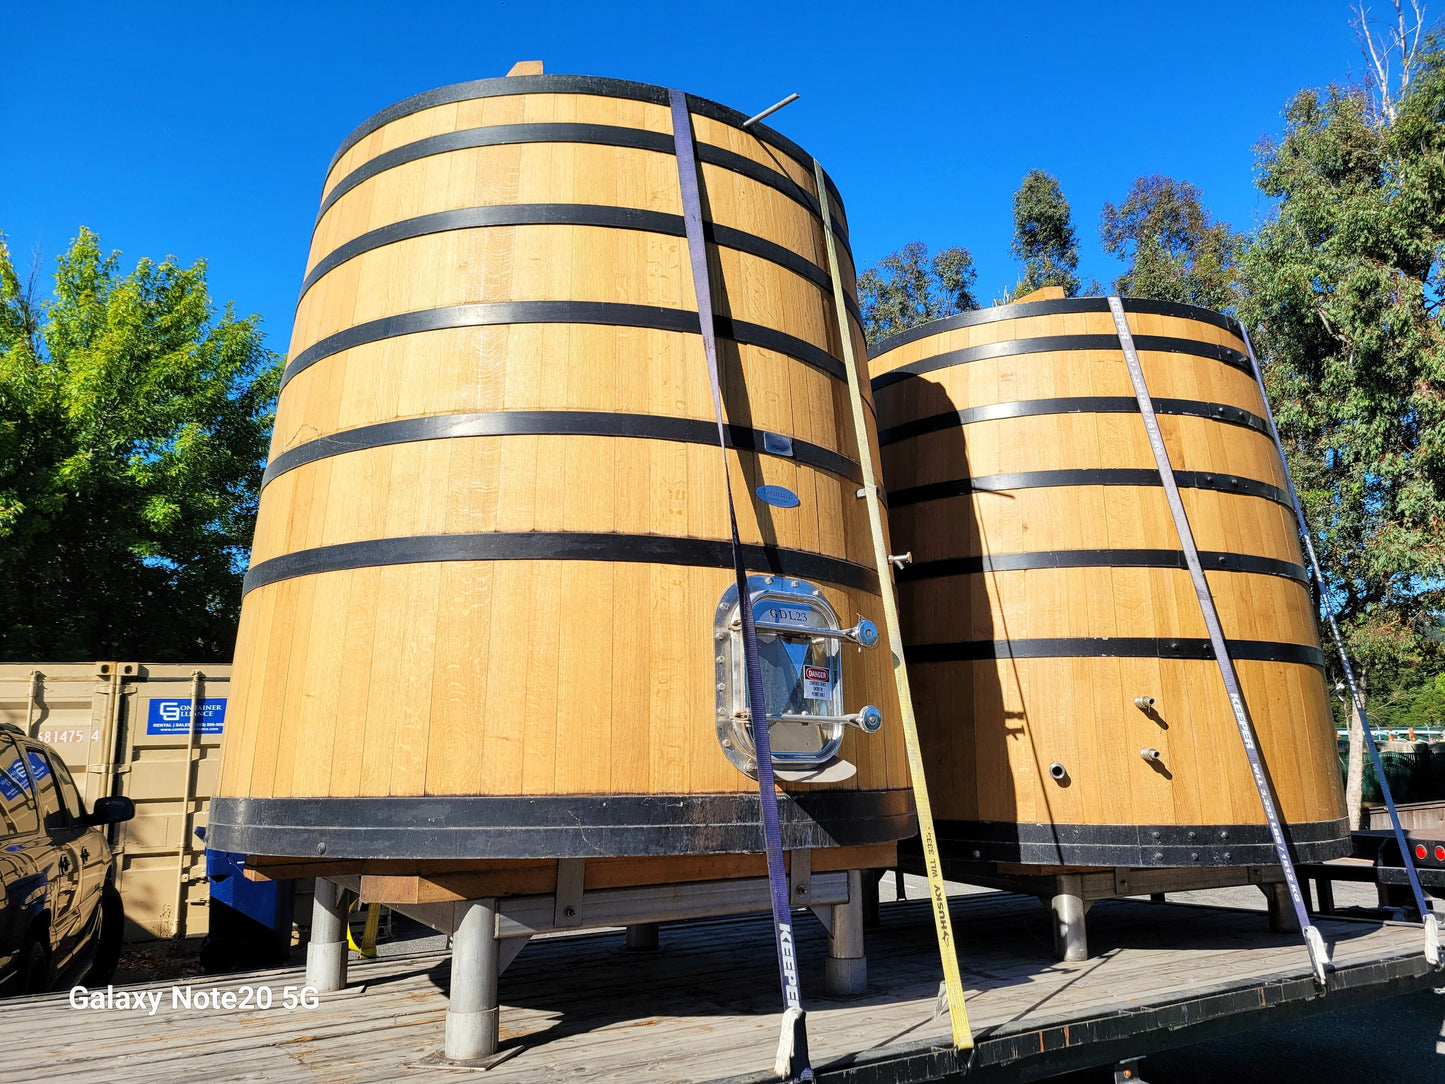 Wine Barrel Nightstand - COMODINO - Made from retired California wine barrels. 100% Recycled!